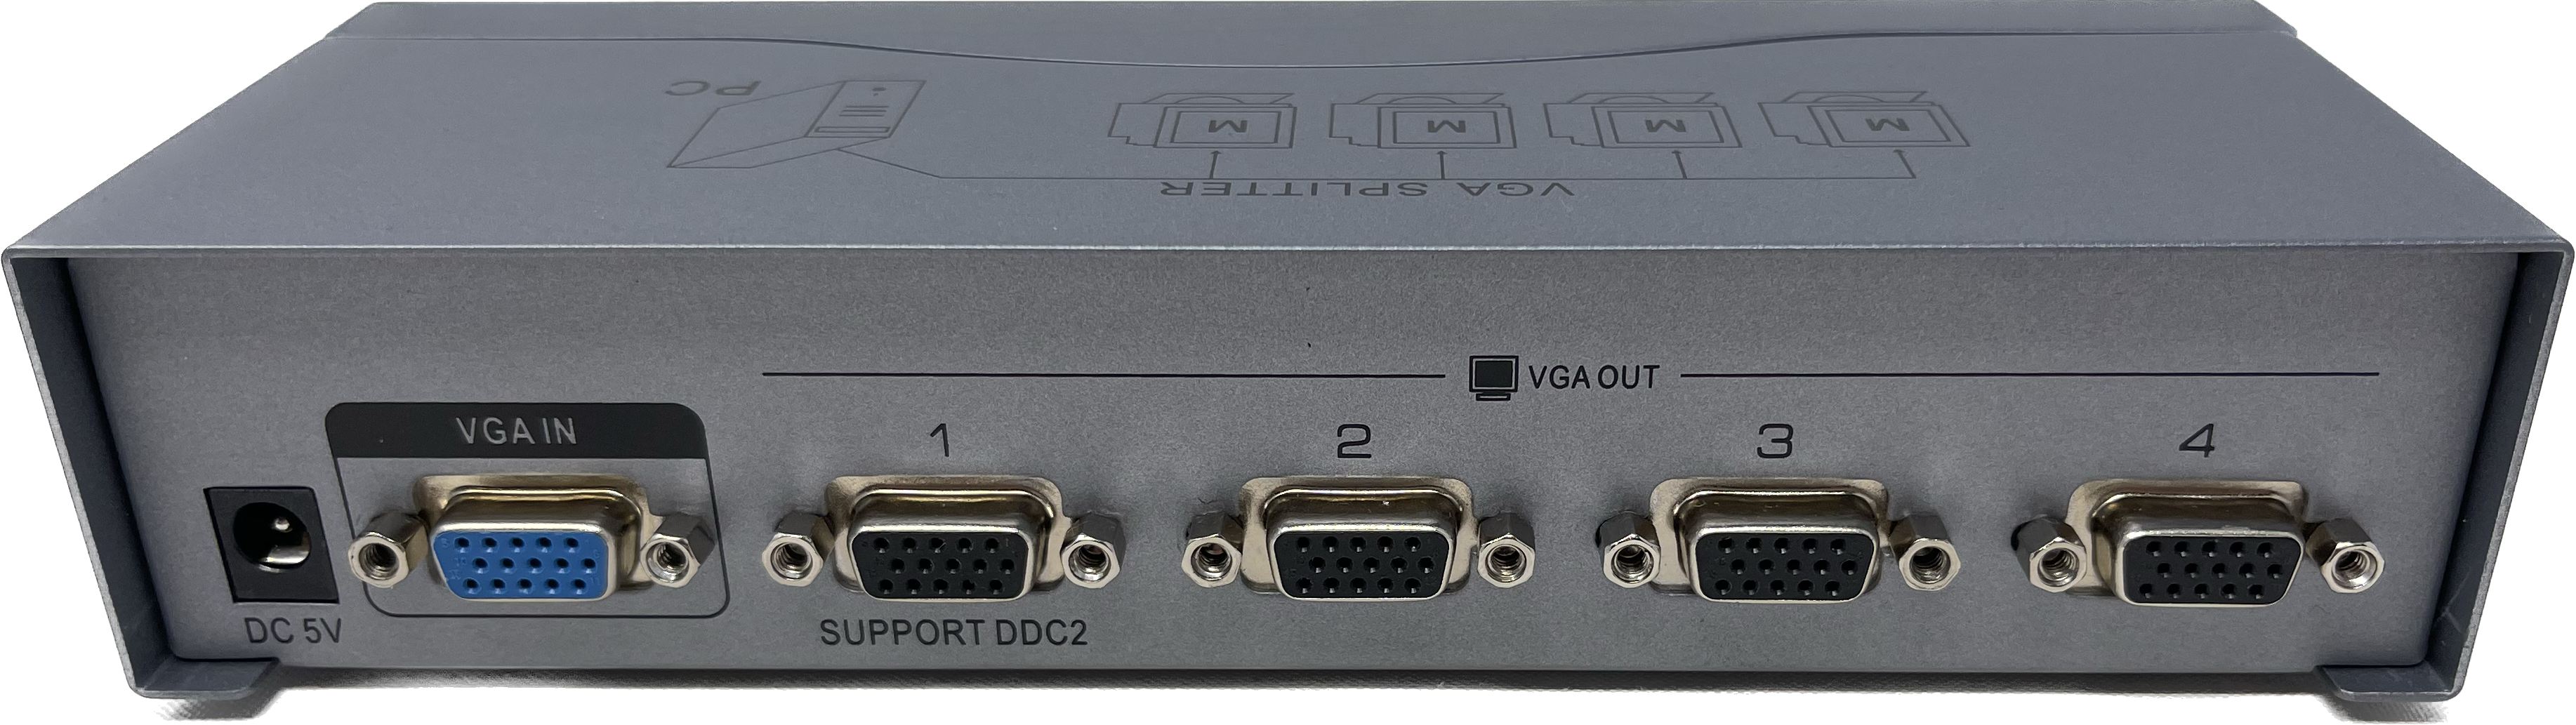 DTECH 4-Port VGA Splitter Box 1 in 4 Out Video Distribution Duplicator